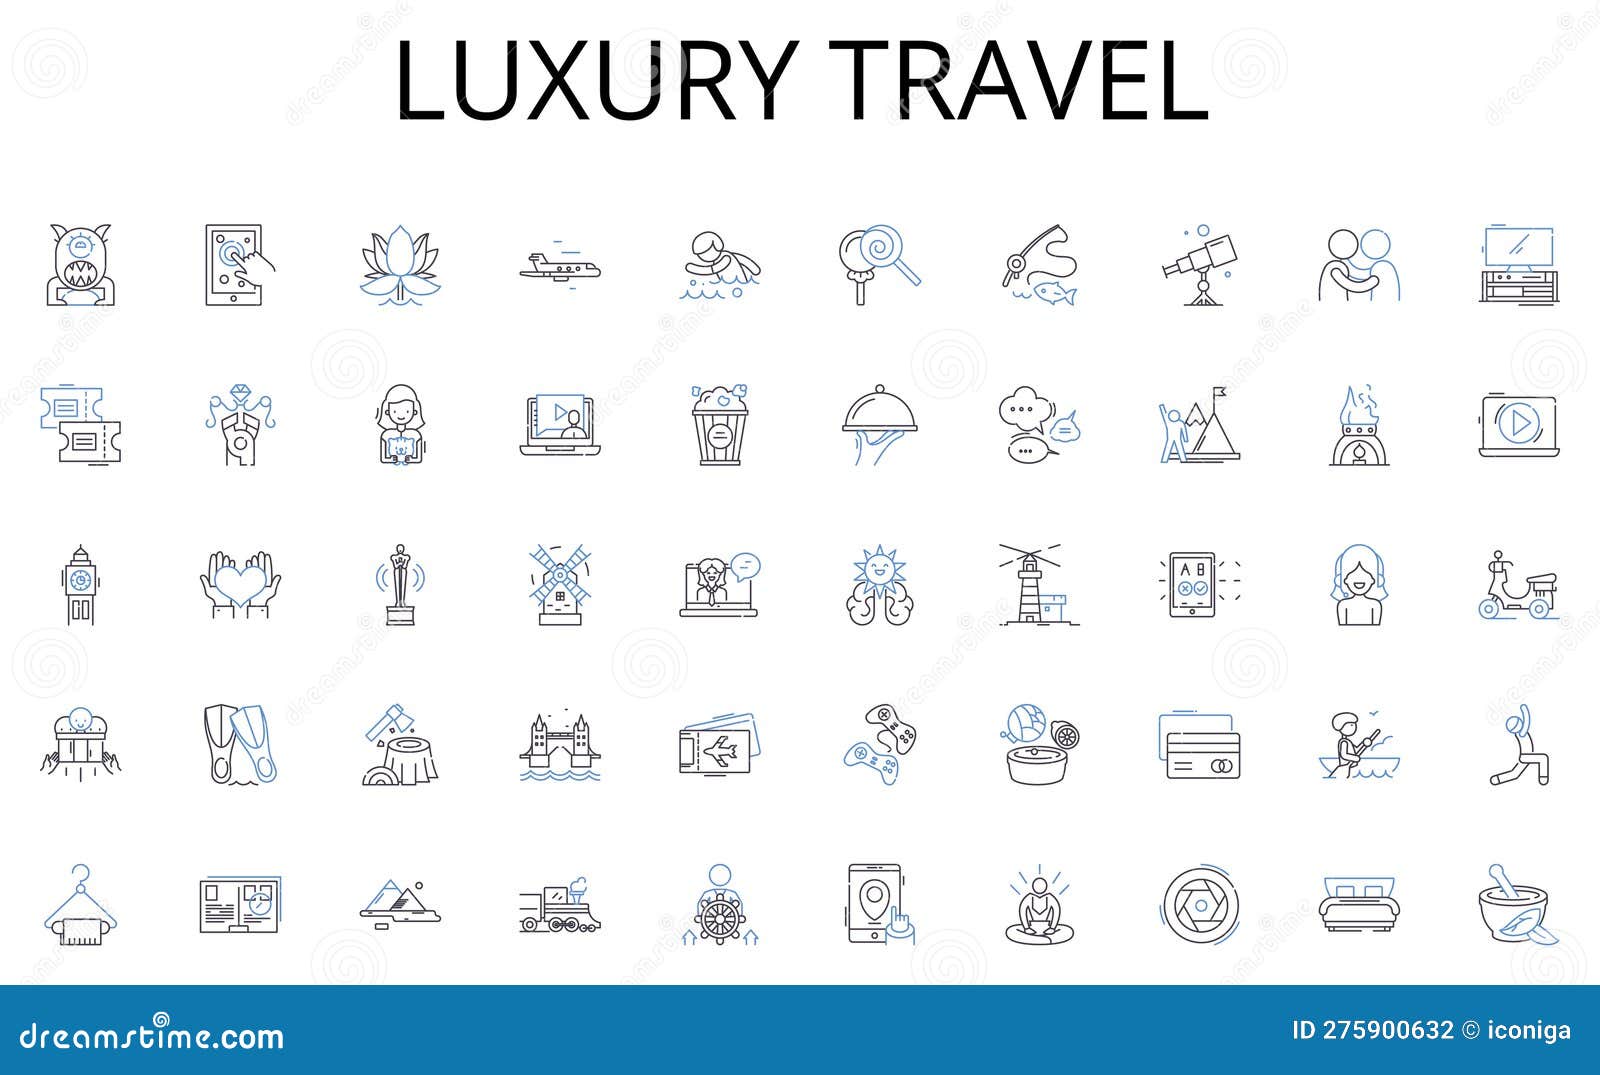 luxury travel line icons collection. convene, assemble, confabulate, congregate, huddle, caucus, symposium  and